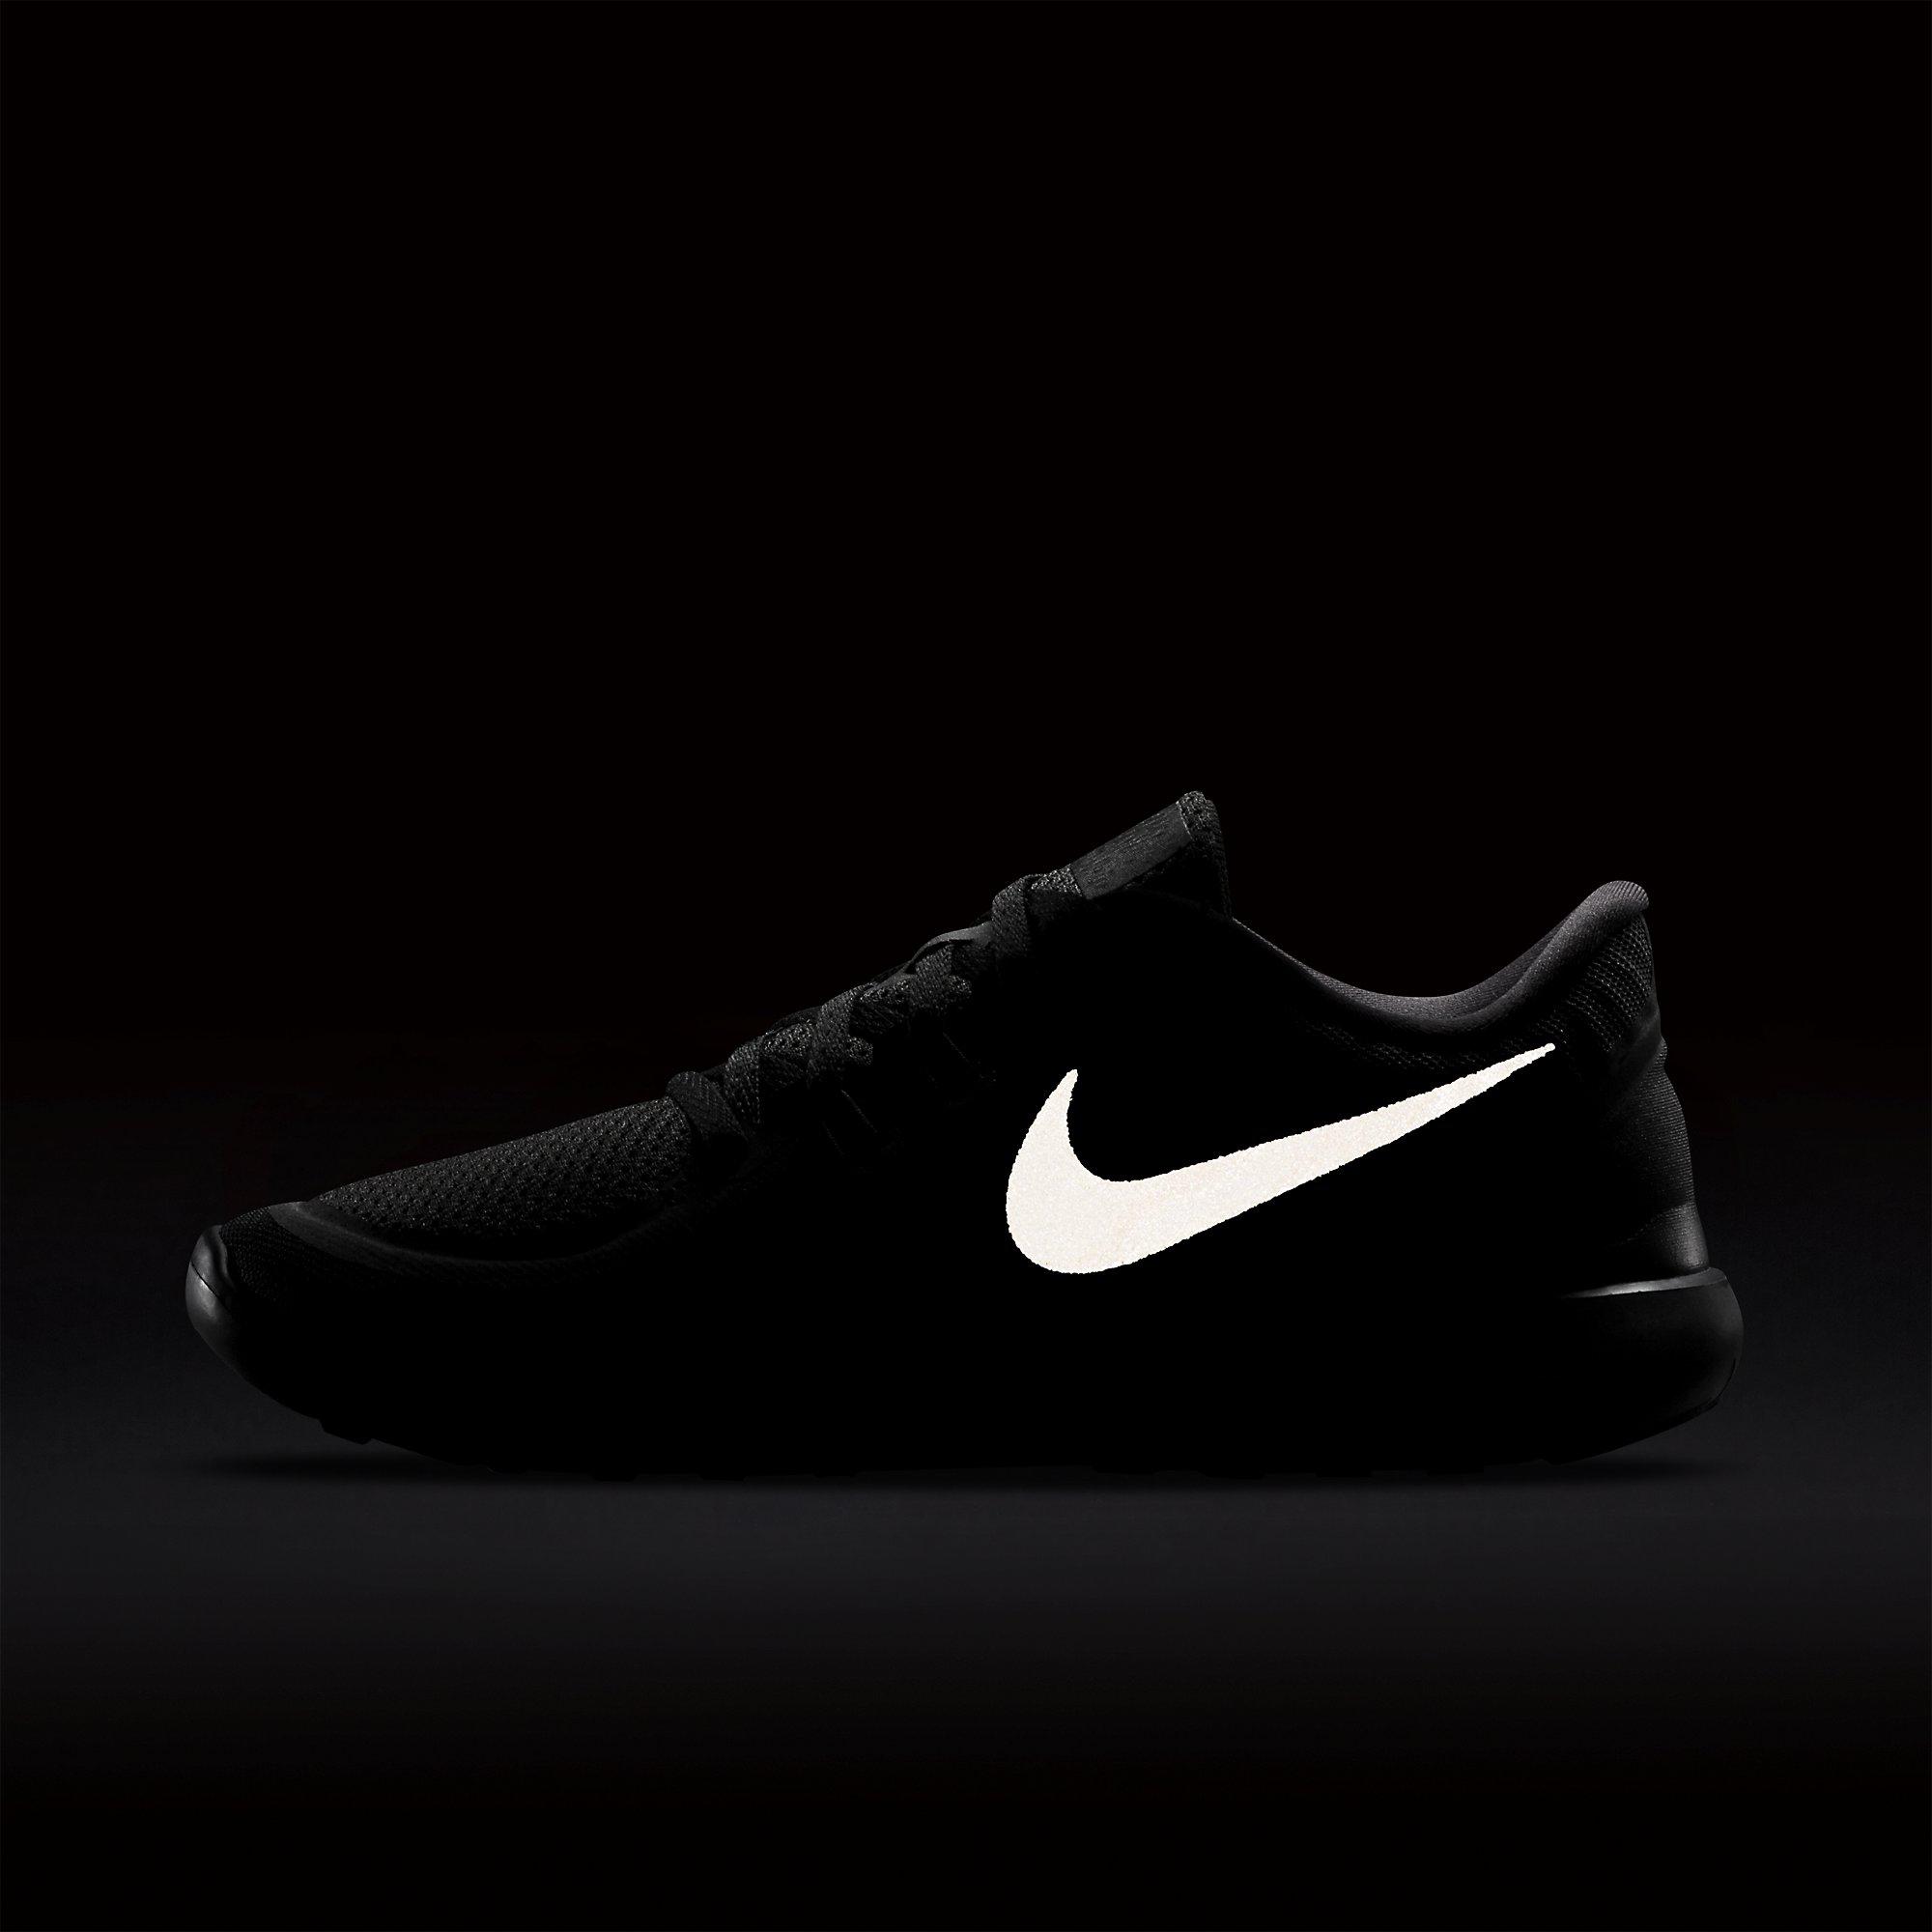 Nike Womens Free 5.0+ Running Shoes - Black/Anthracite - Tennisnuts.com